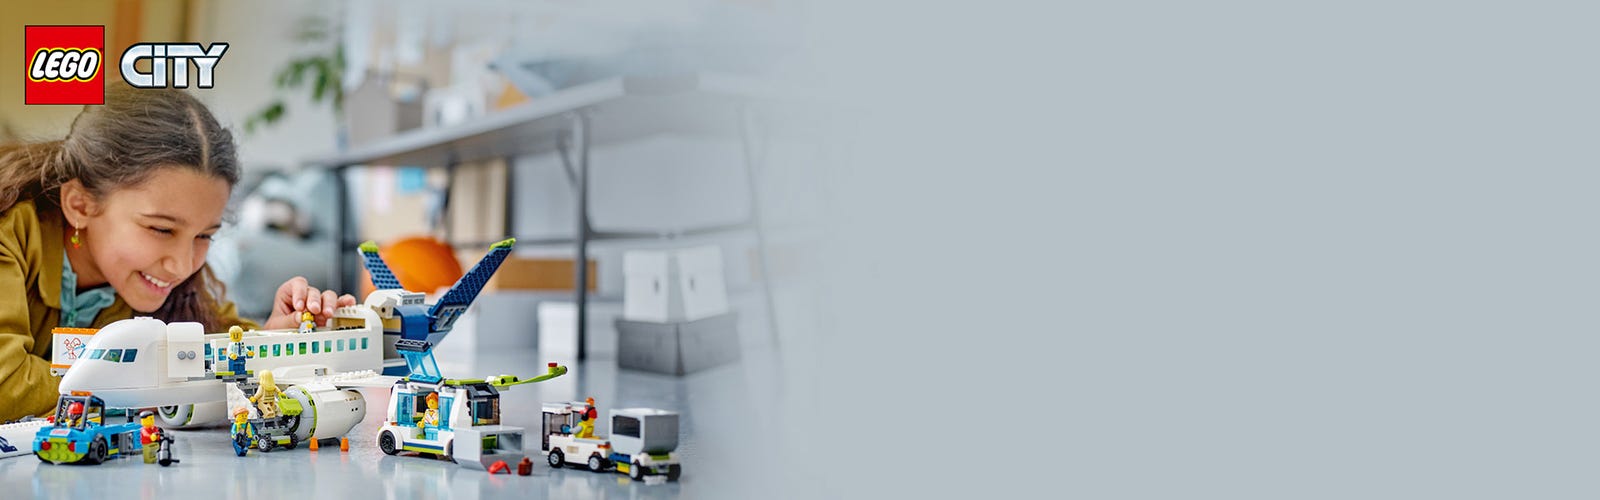 LEGO City Avion de Pasajeros 60367 — Distrito Max